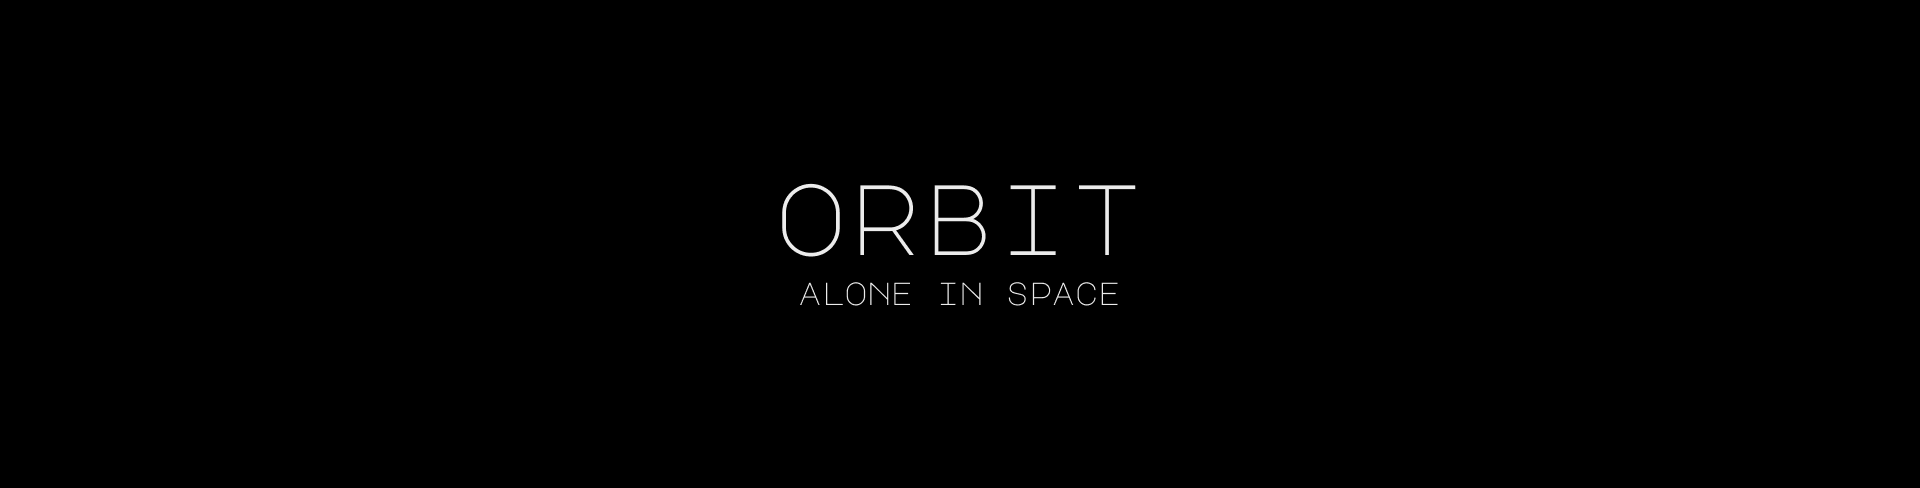 Orbit: Alone in Space